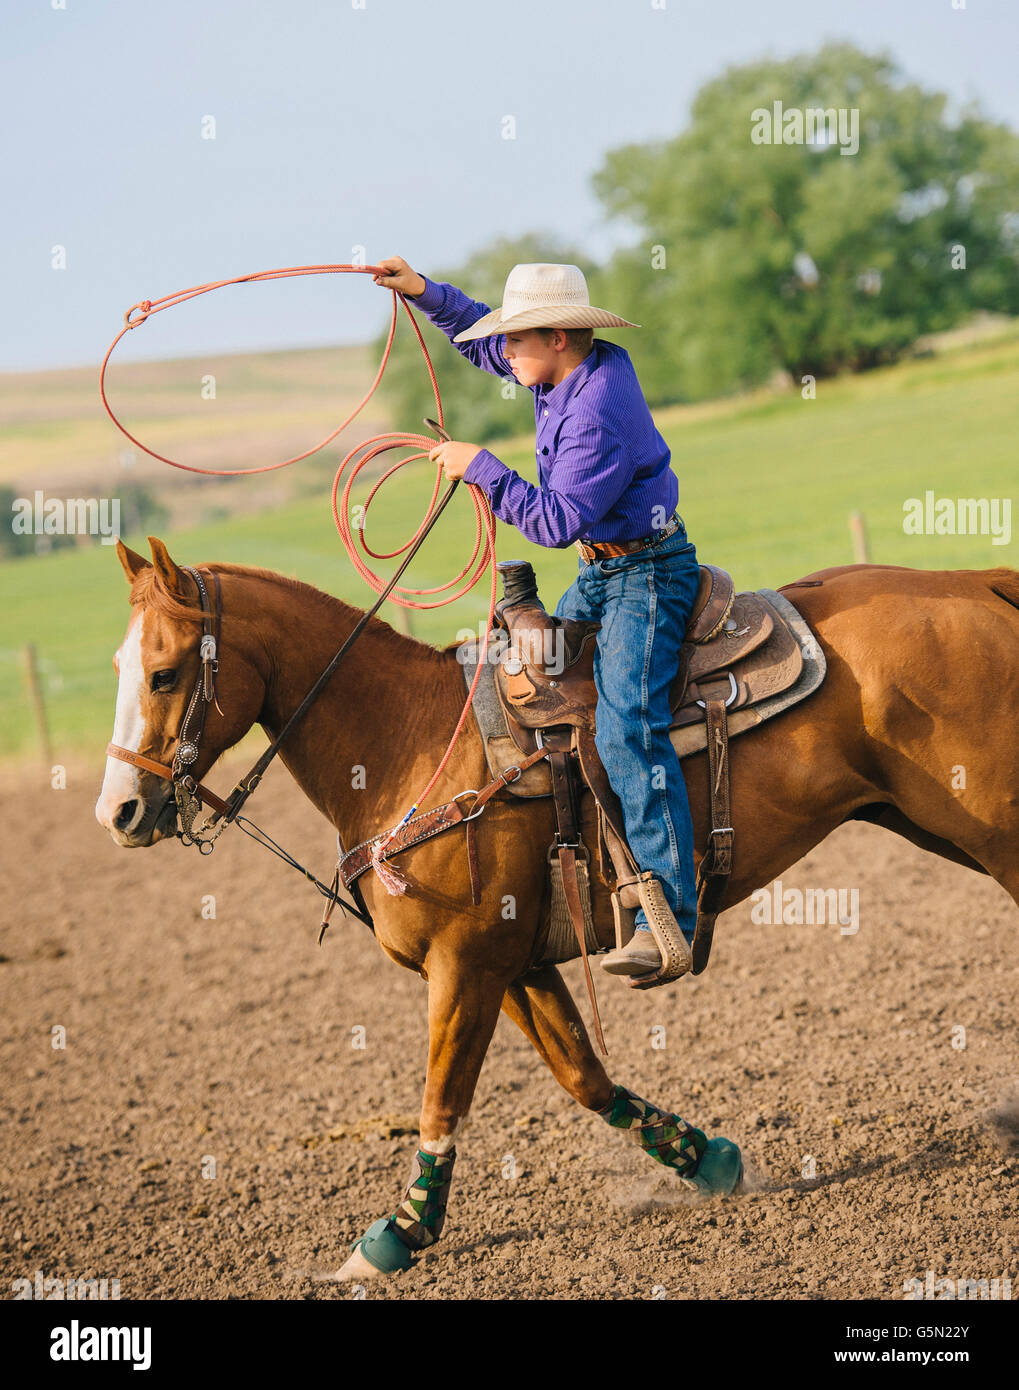 Cowboy throwing lasso on horseback Stock Photo